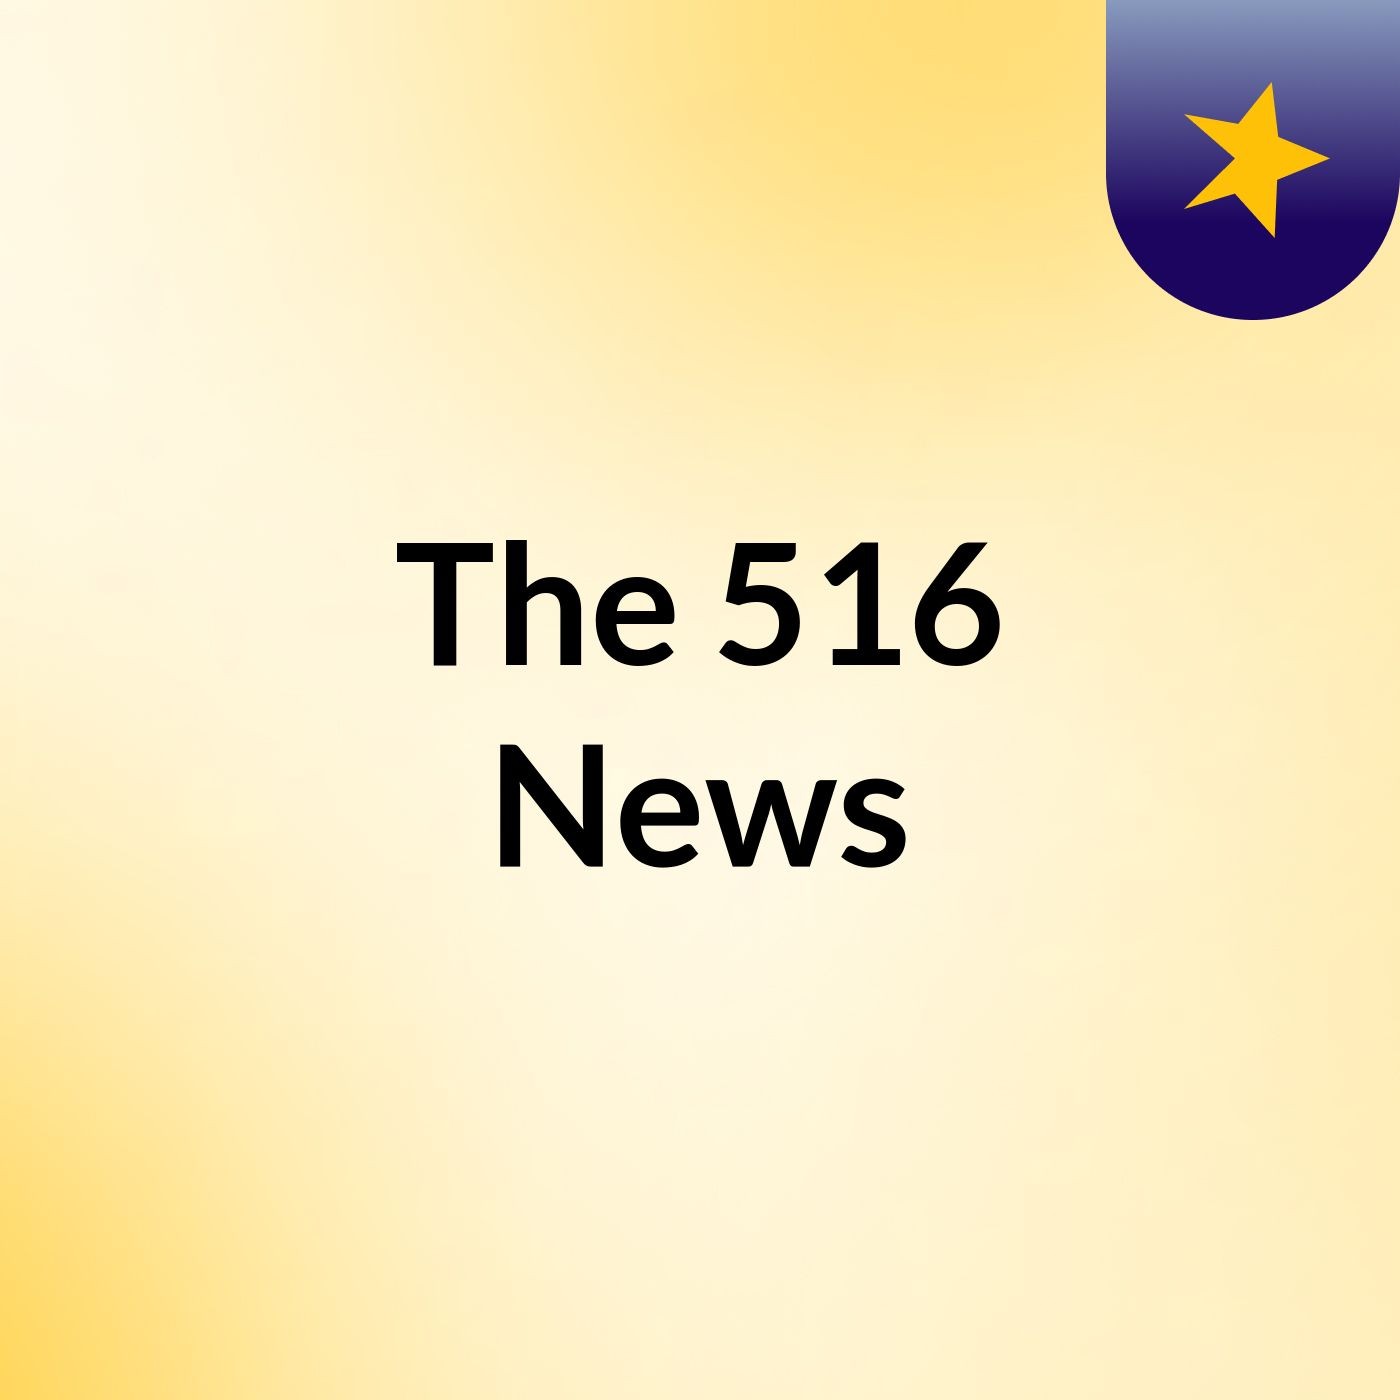 The 516 News